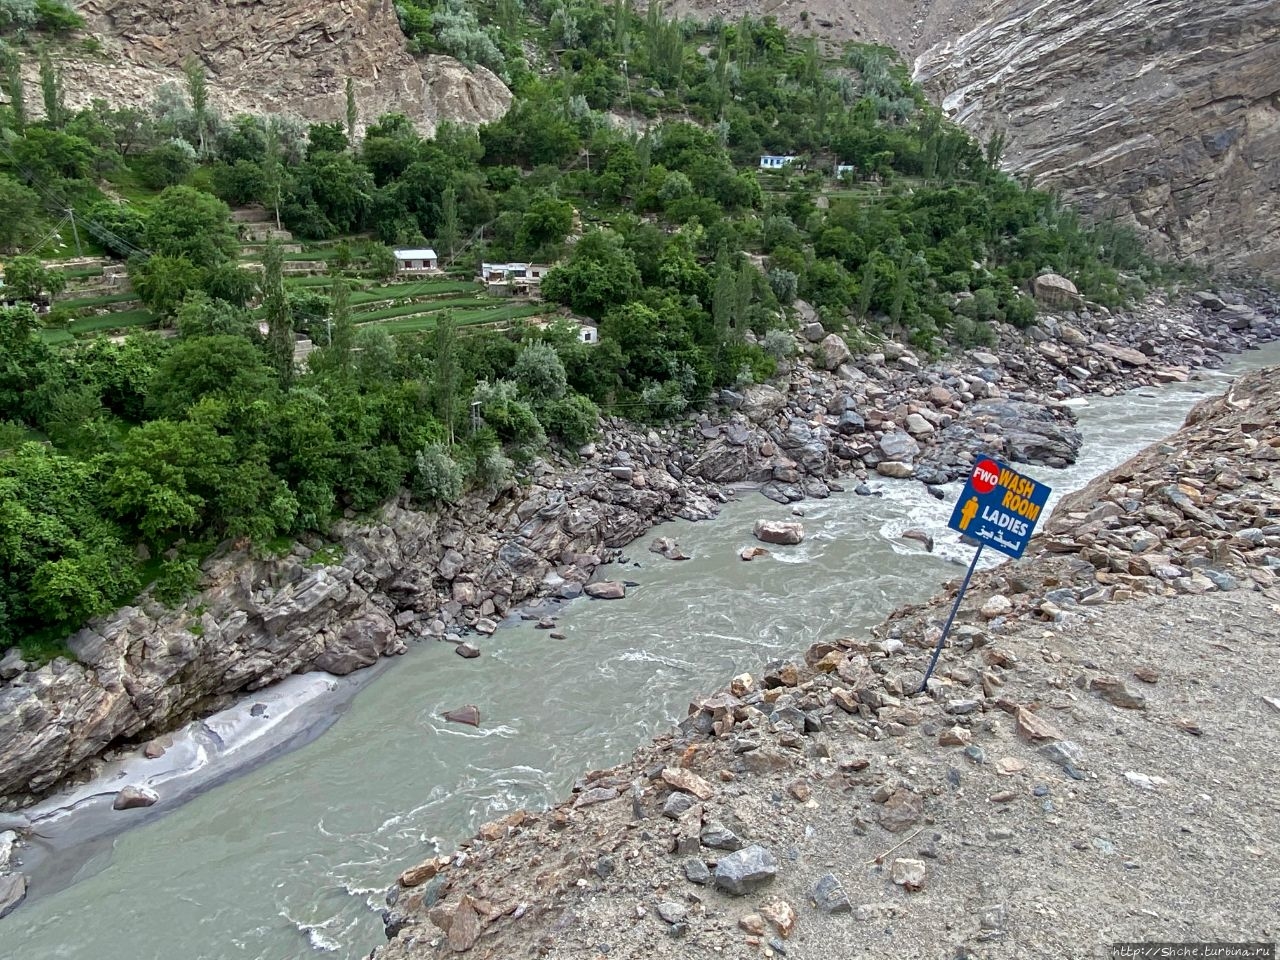 Доходчивые таблички на горном серпантине Балтистана Провинция Гилгит-Балтистан, Пакистан